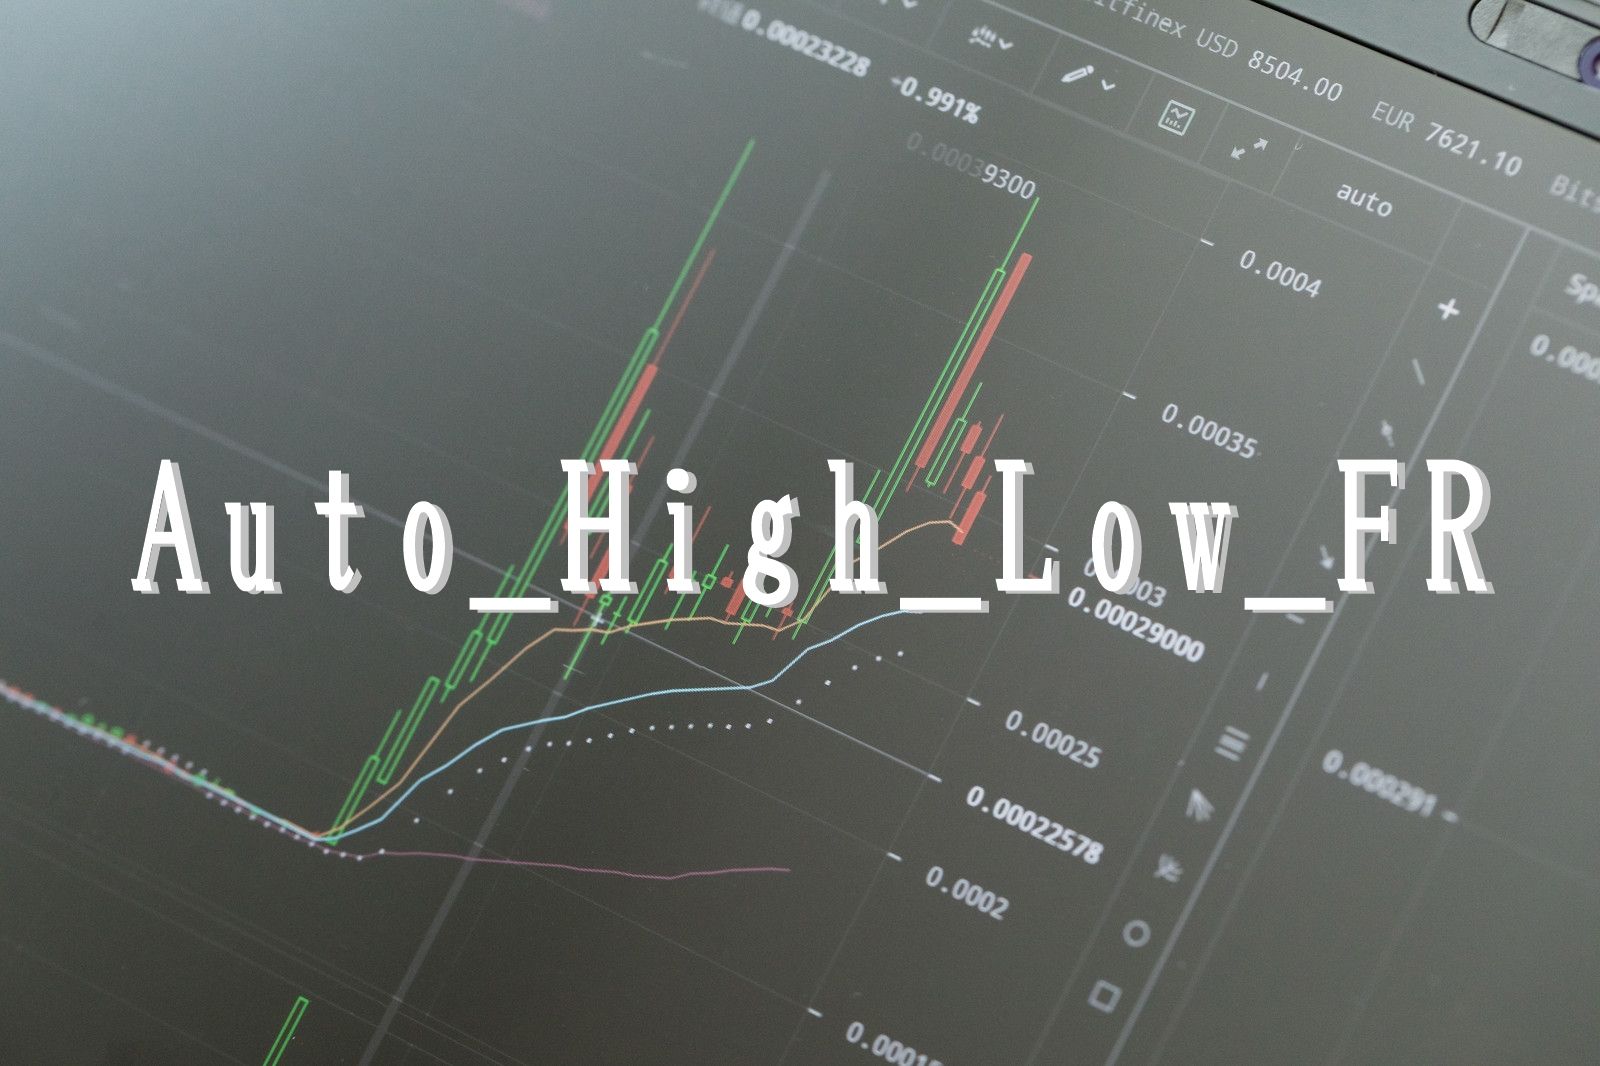 Auto_High_Low_FR Indicators/E-books